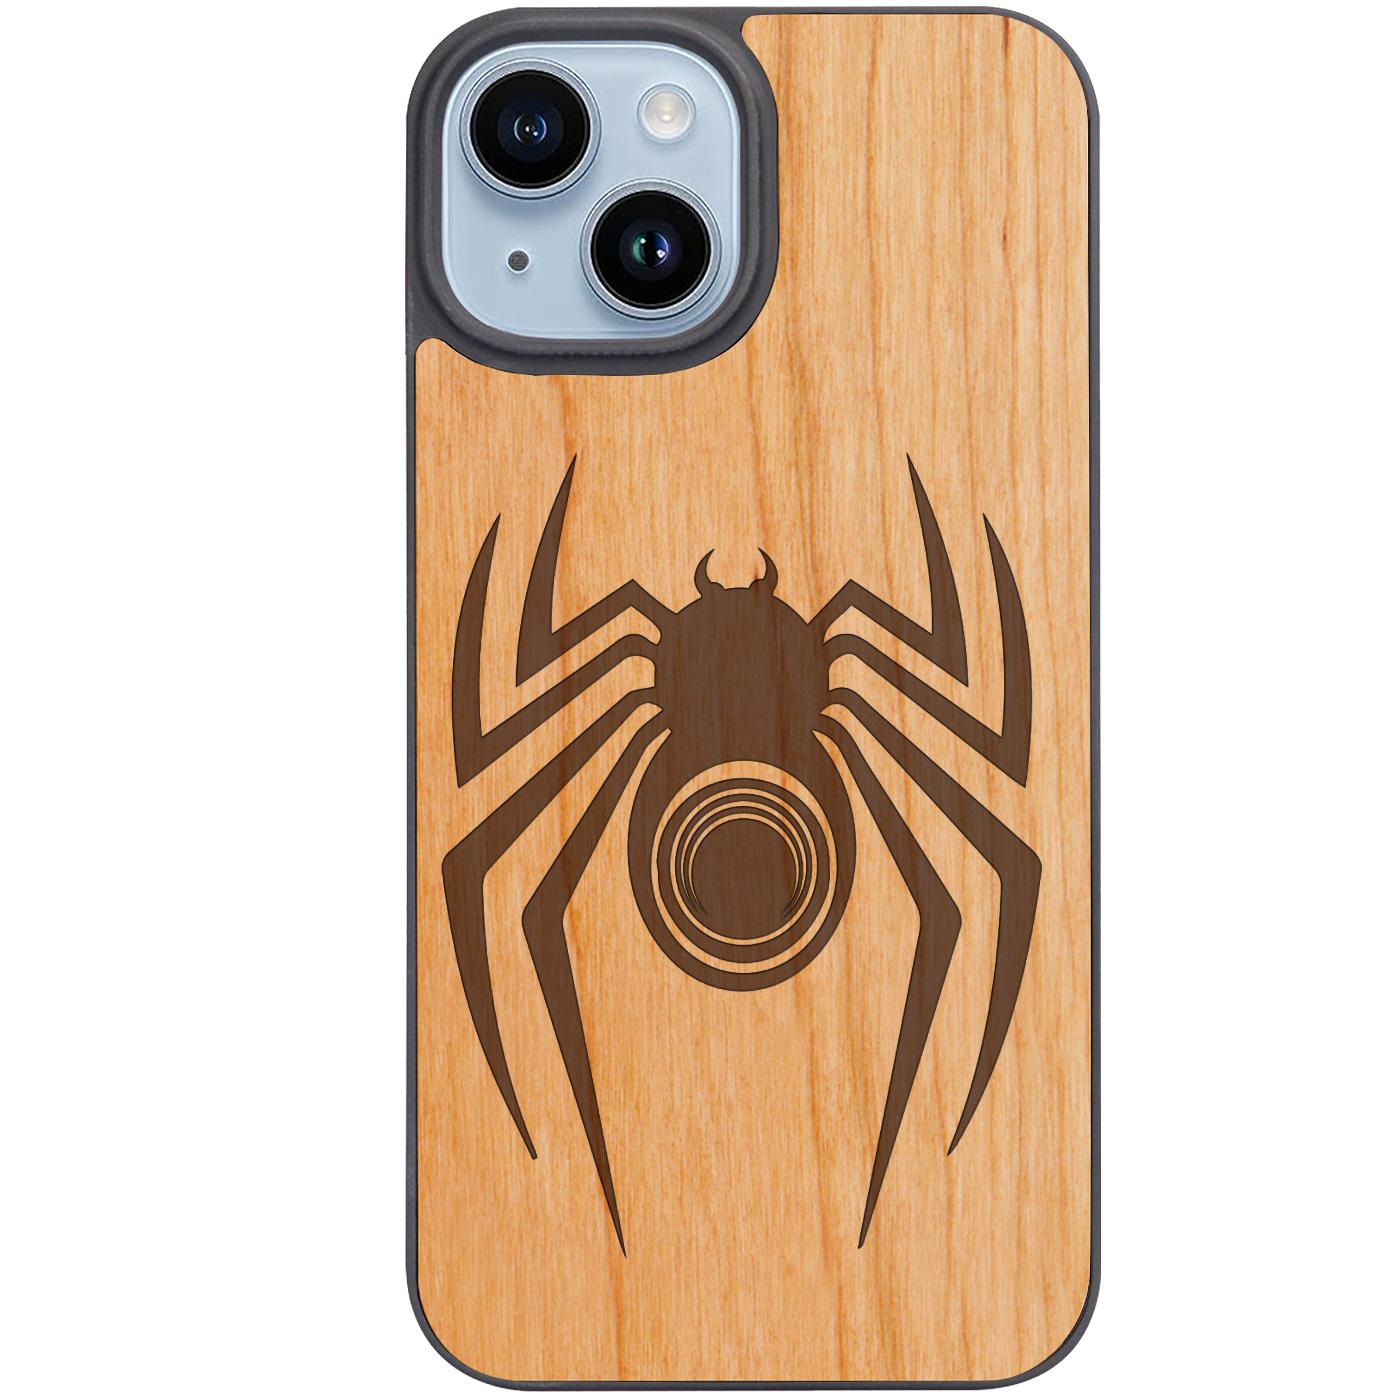 Spider 2 - Engraved Phone Case